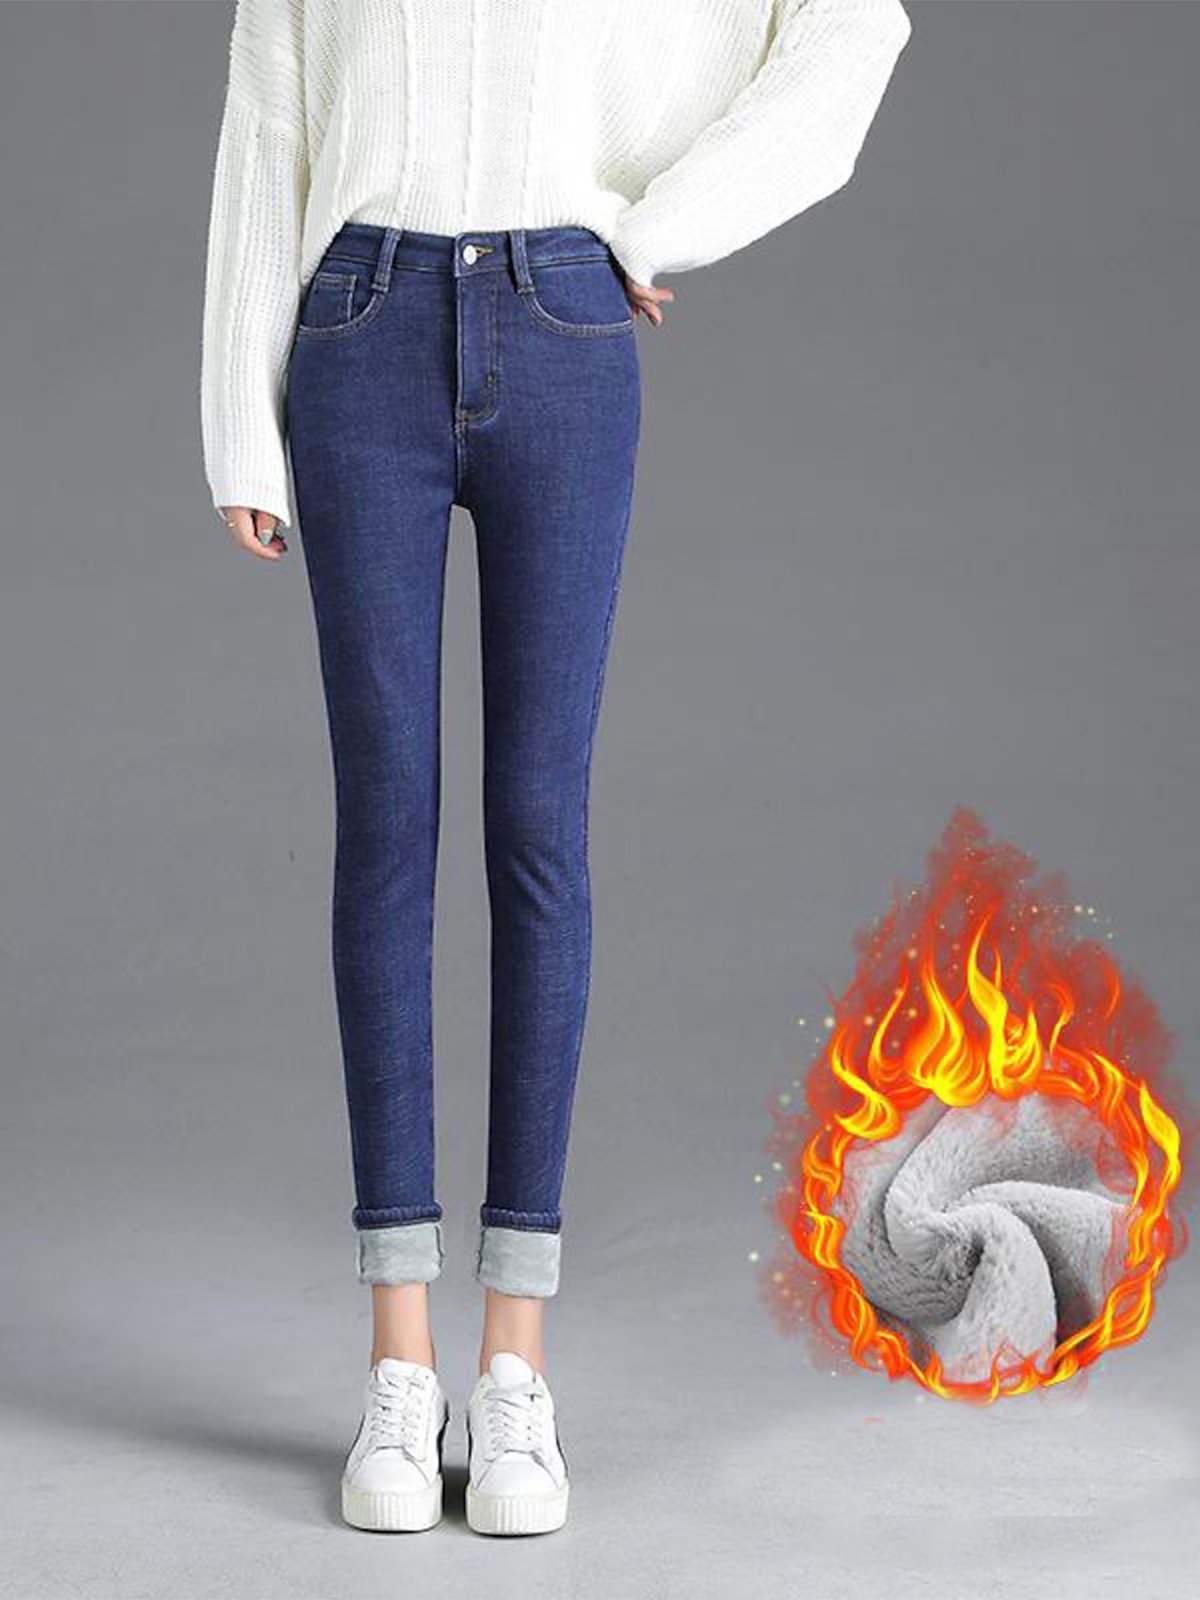 Casual Plain Fluff/Granular Fleece Fabric Jeans Plush color has many colors